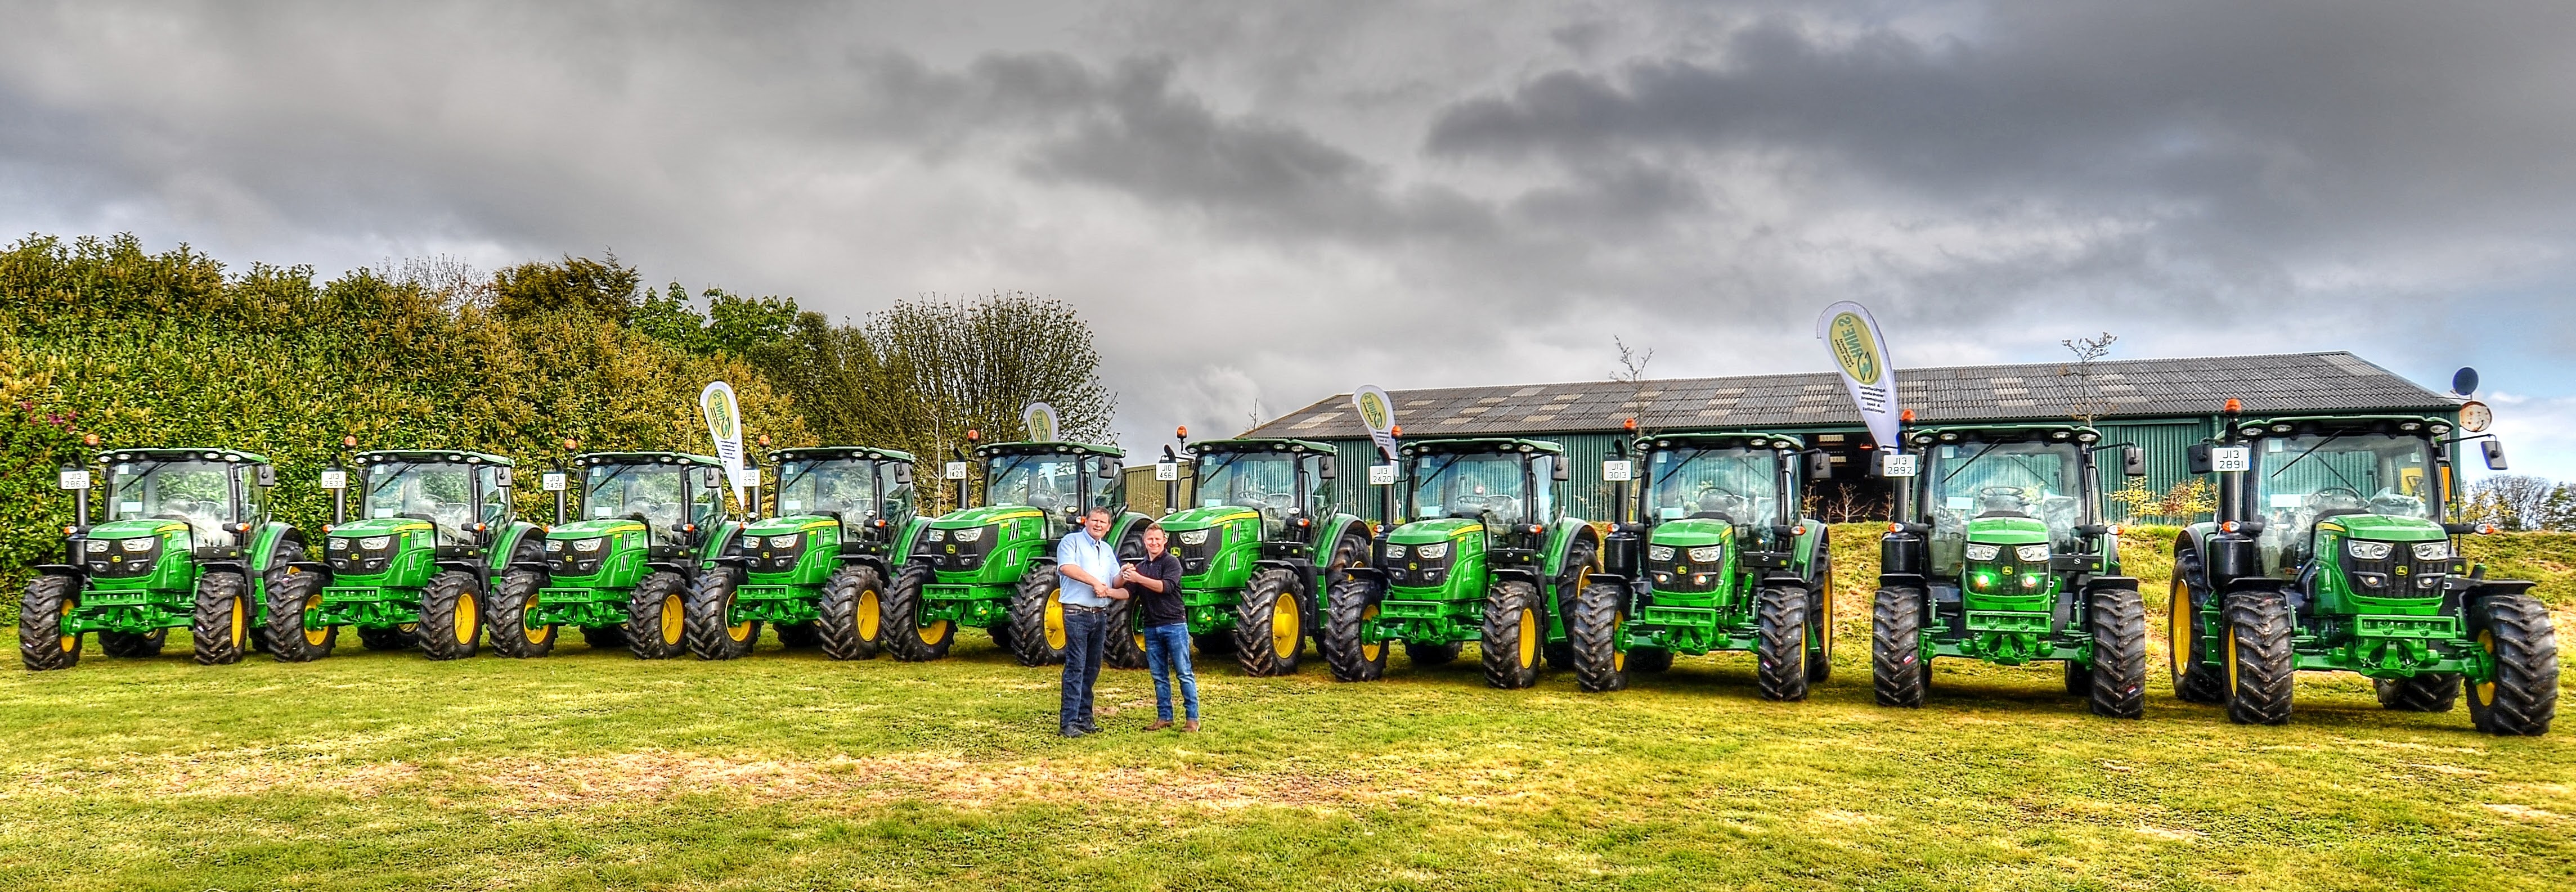 New tractors.jpg